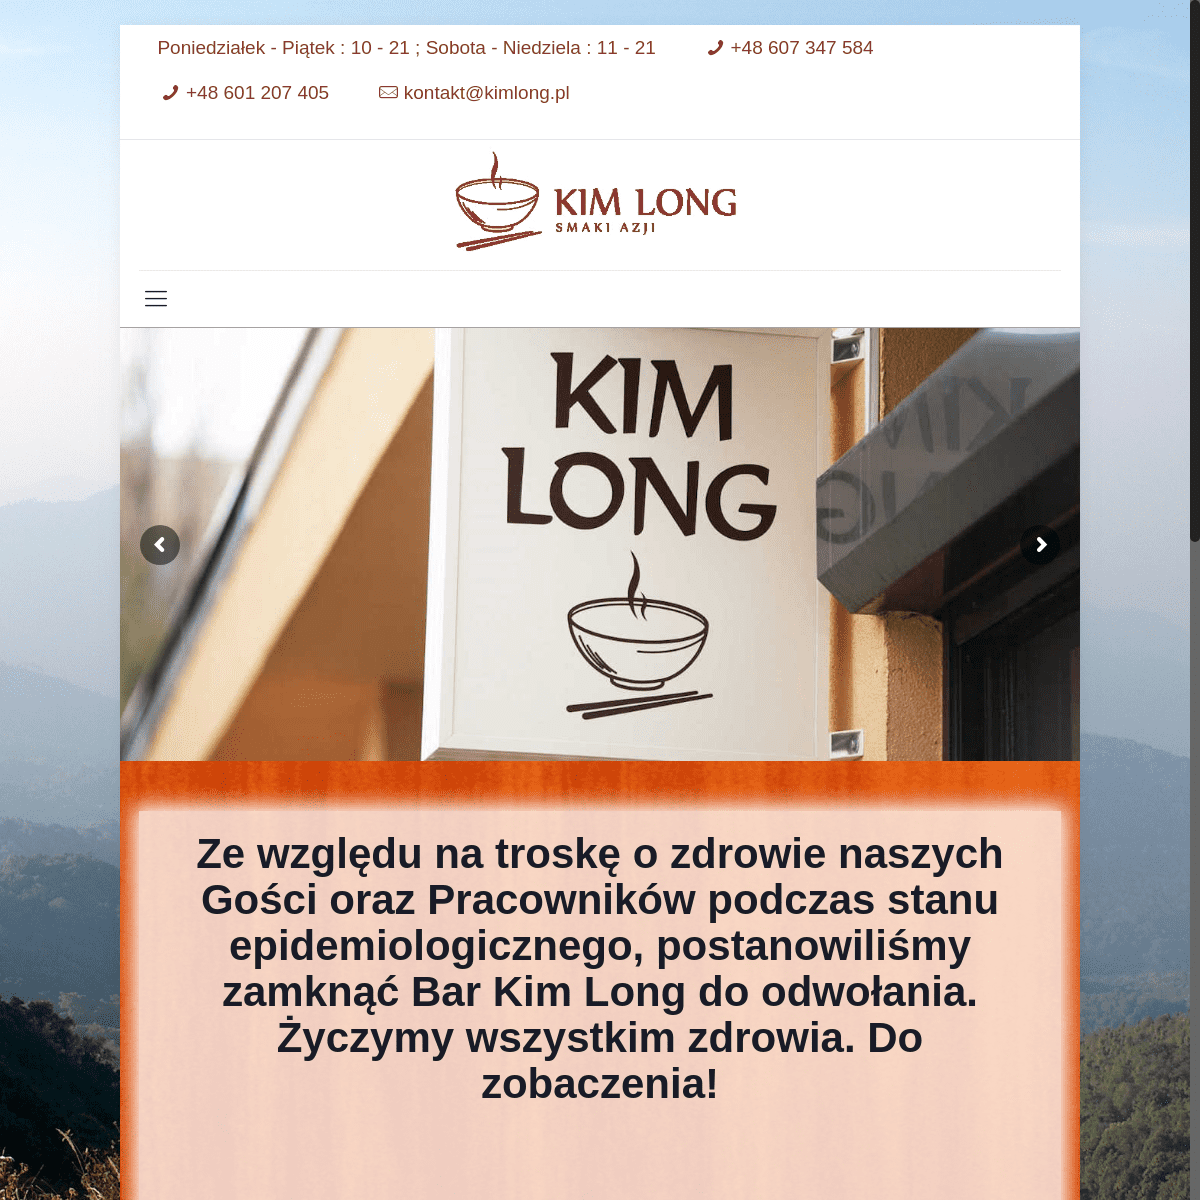 A complete backup of kimlong.pl